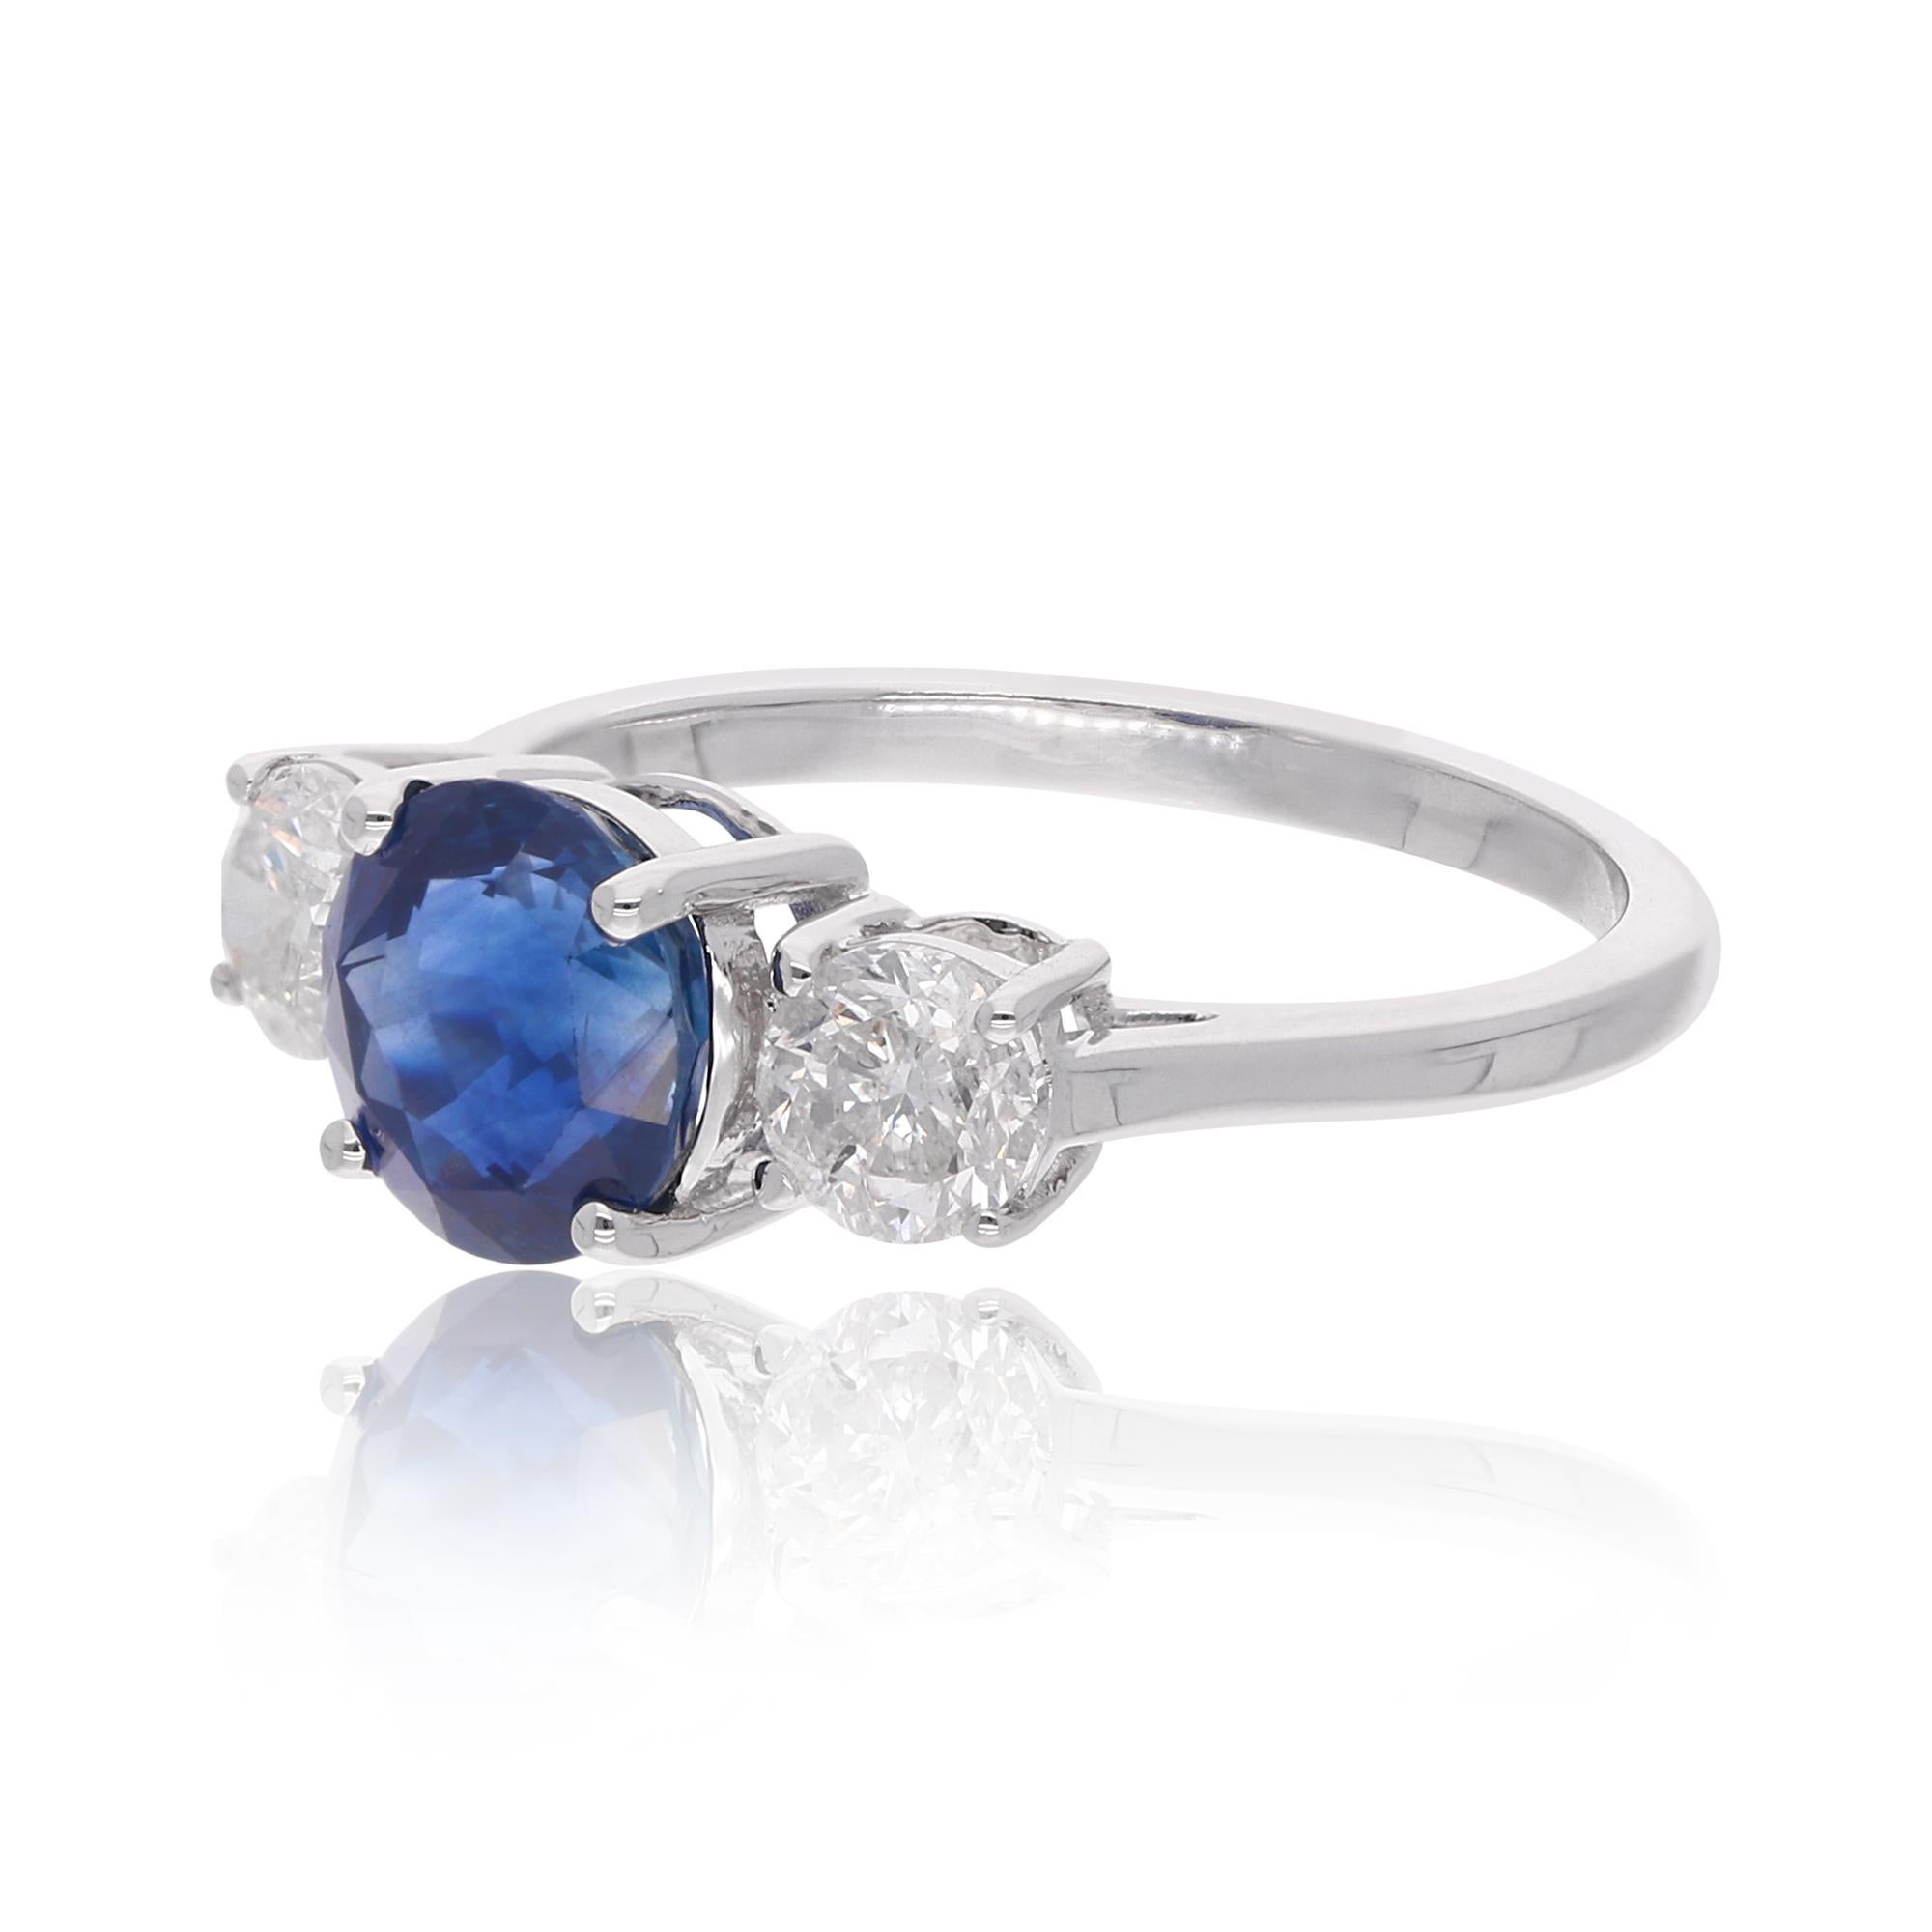 For Sale:  Blue Sapphire Gemstone Ring Diamond 18 Karat White Gold Handmade Fine Jewelry 3